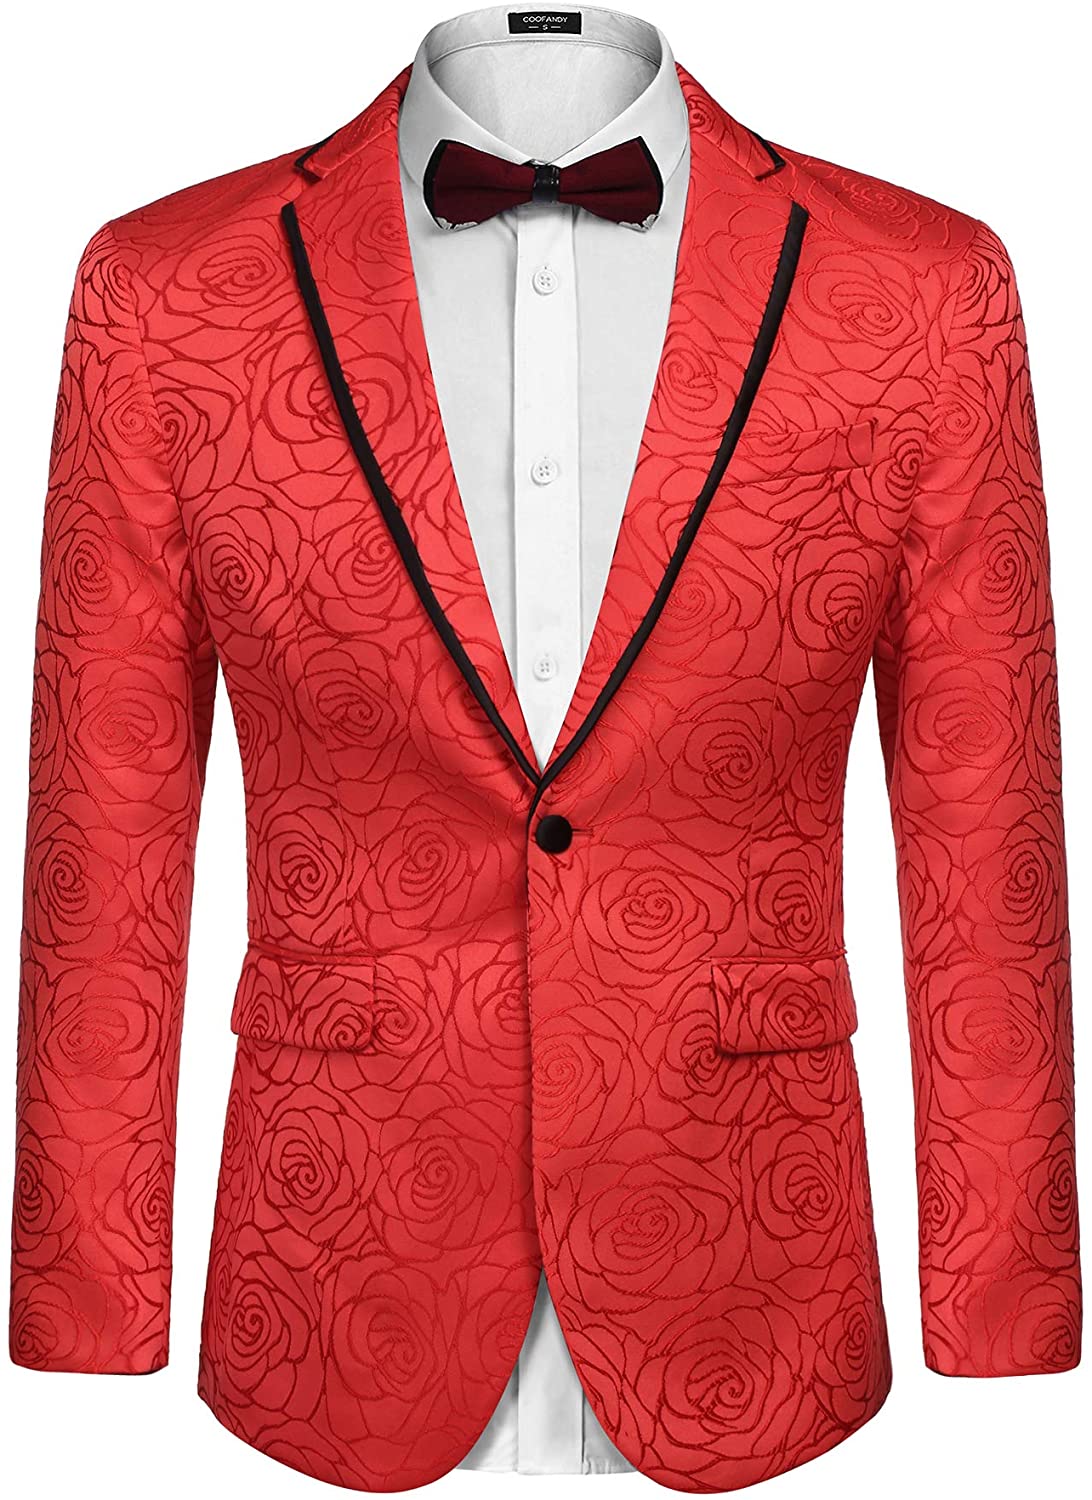 COOFANDY Men's Rose Floral Suit Jacket Blazer Weddings Prom Party ...